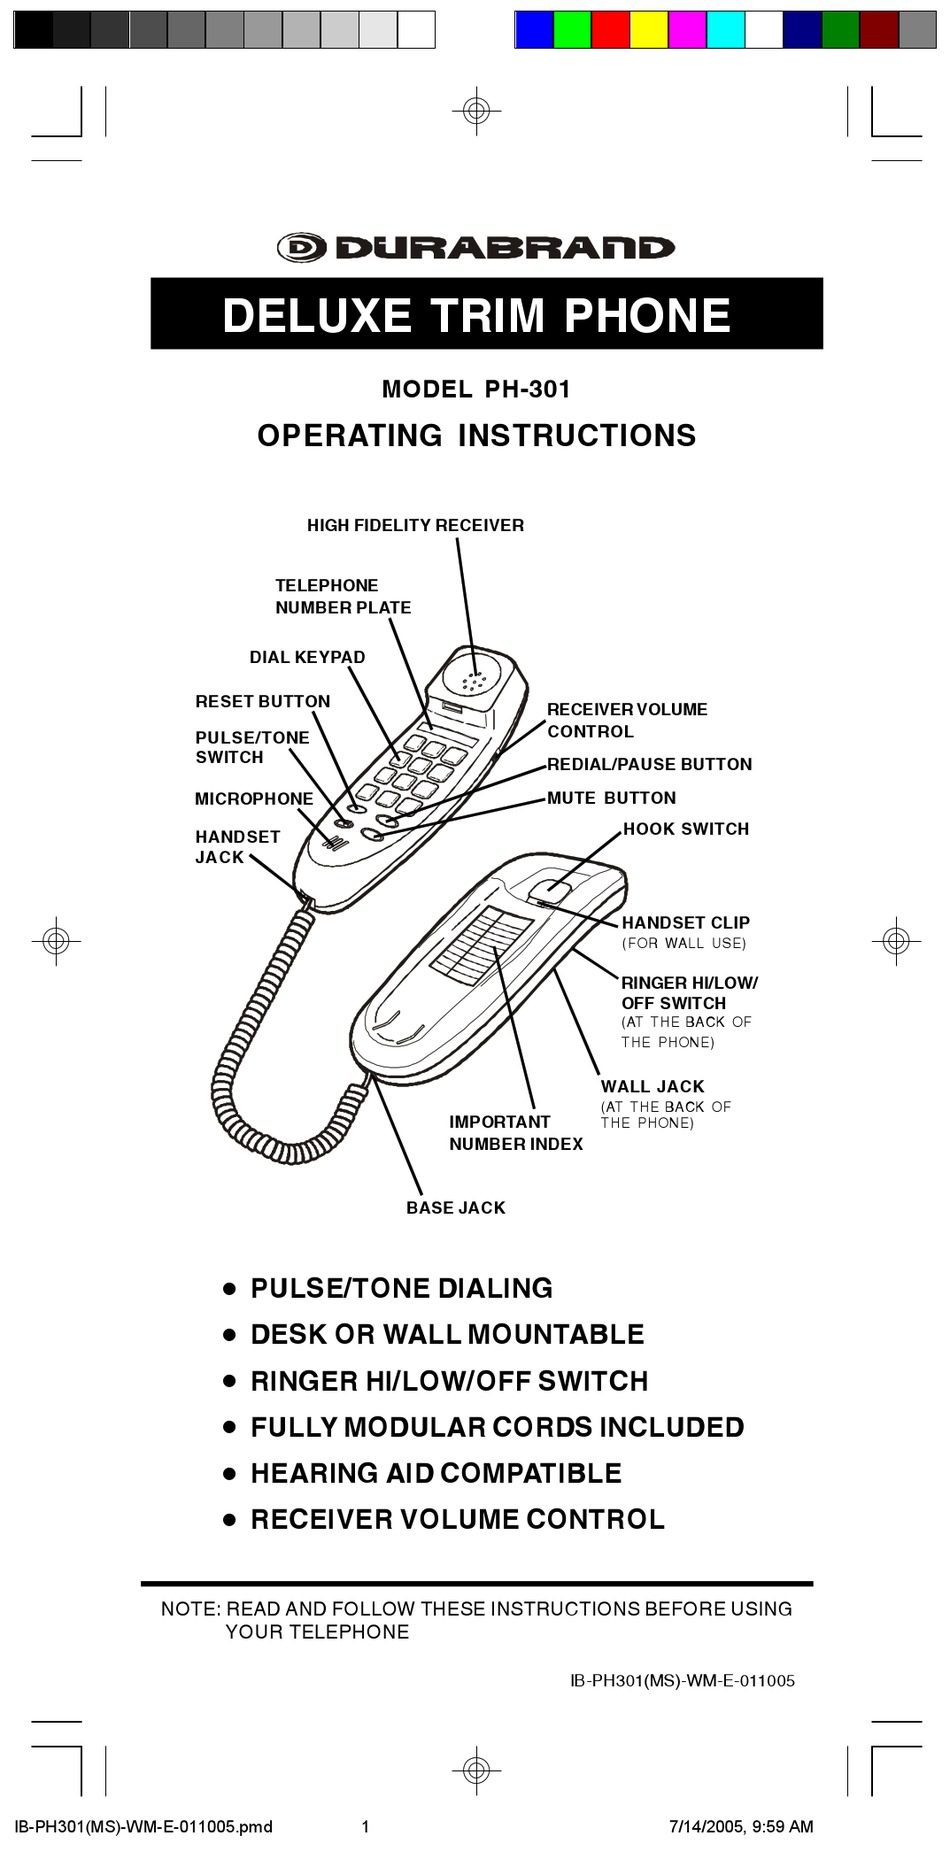 durabrand phone model ph 3238 manual